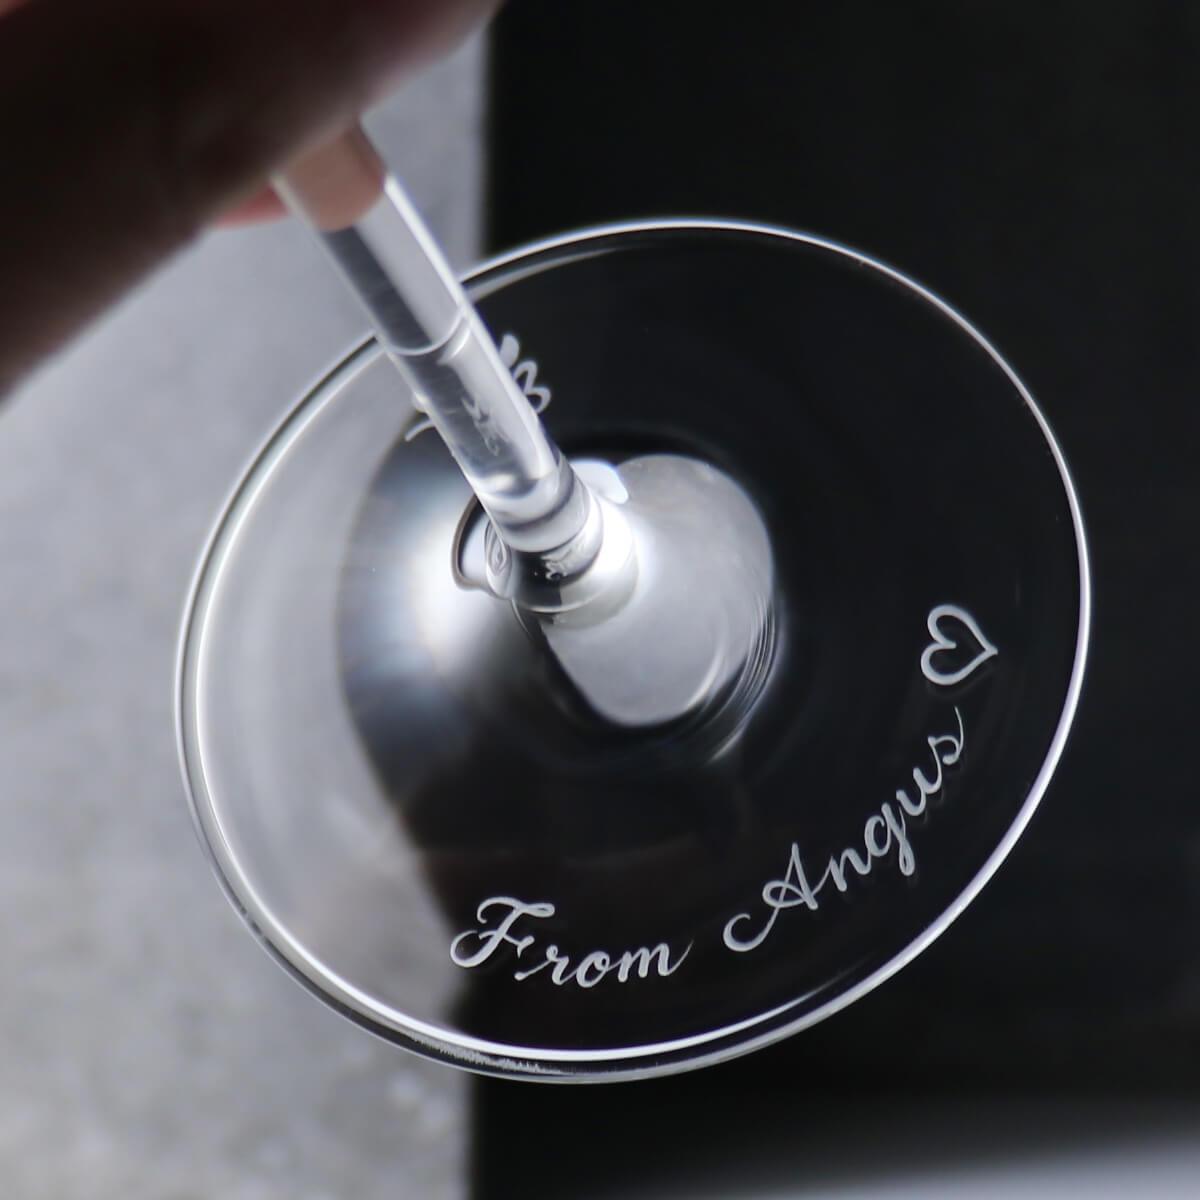 710cc【會呼吸的酒杯】德國Eisch水晶杯(大容量快速醒酒杯) - MSA玻璃雕刻